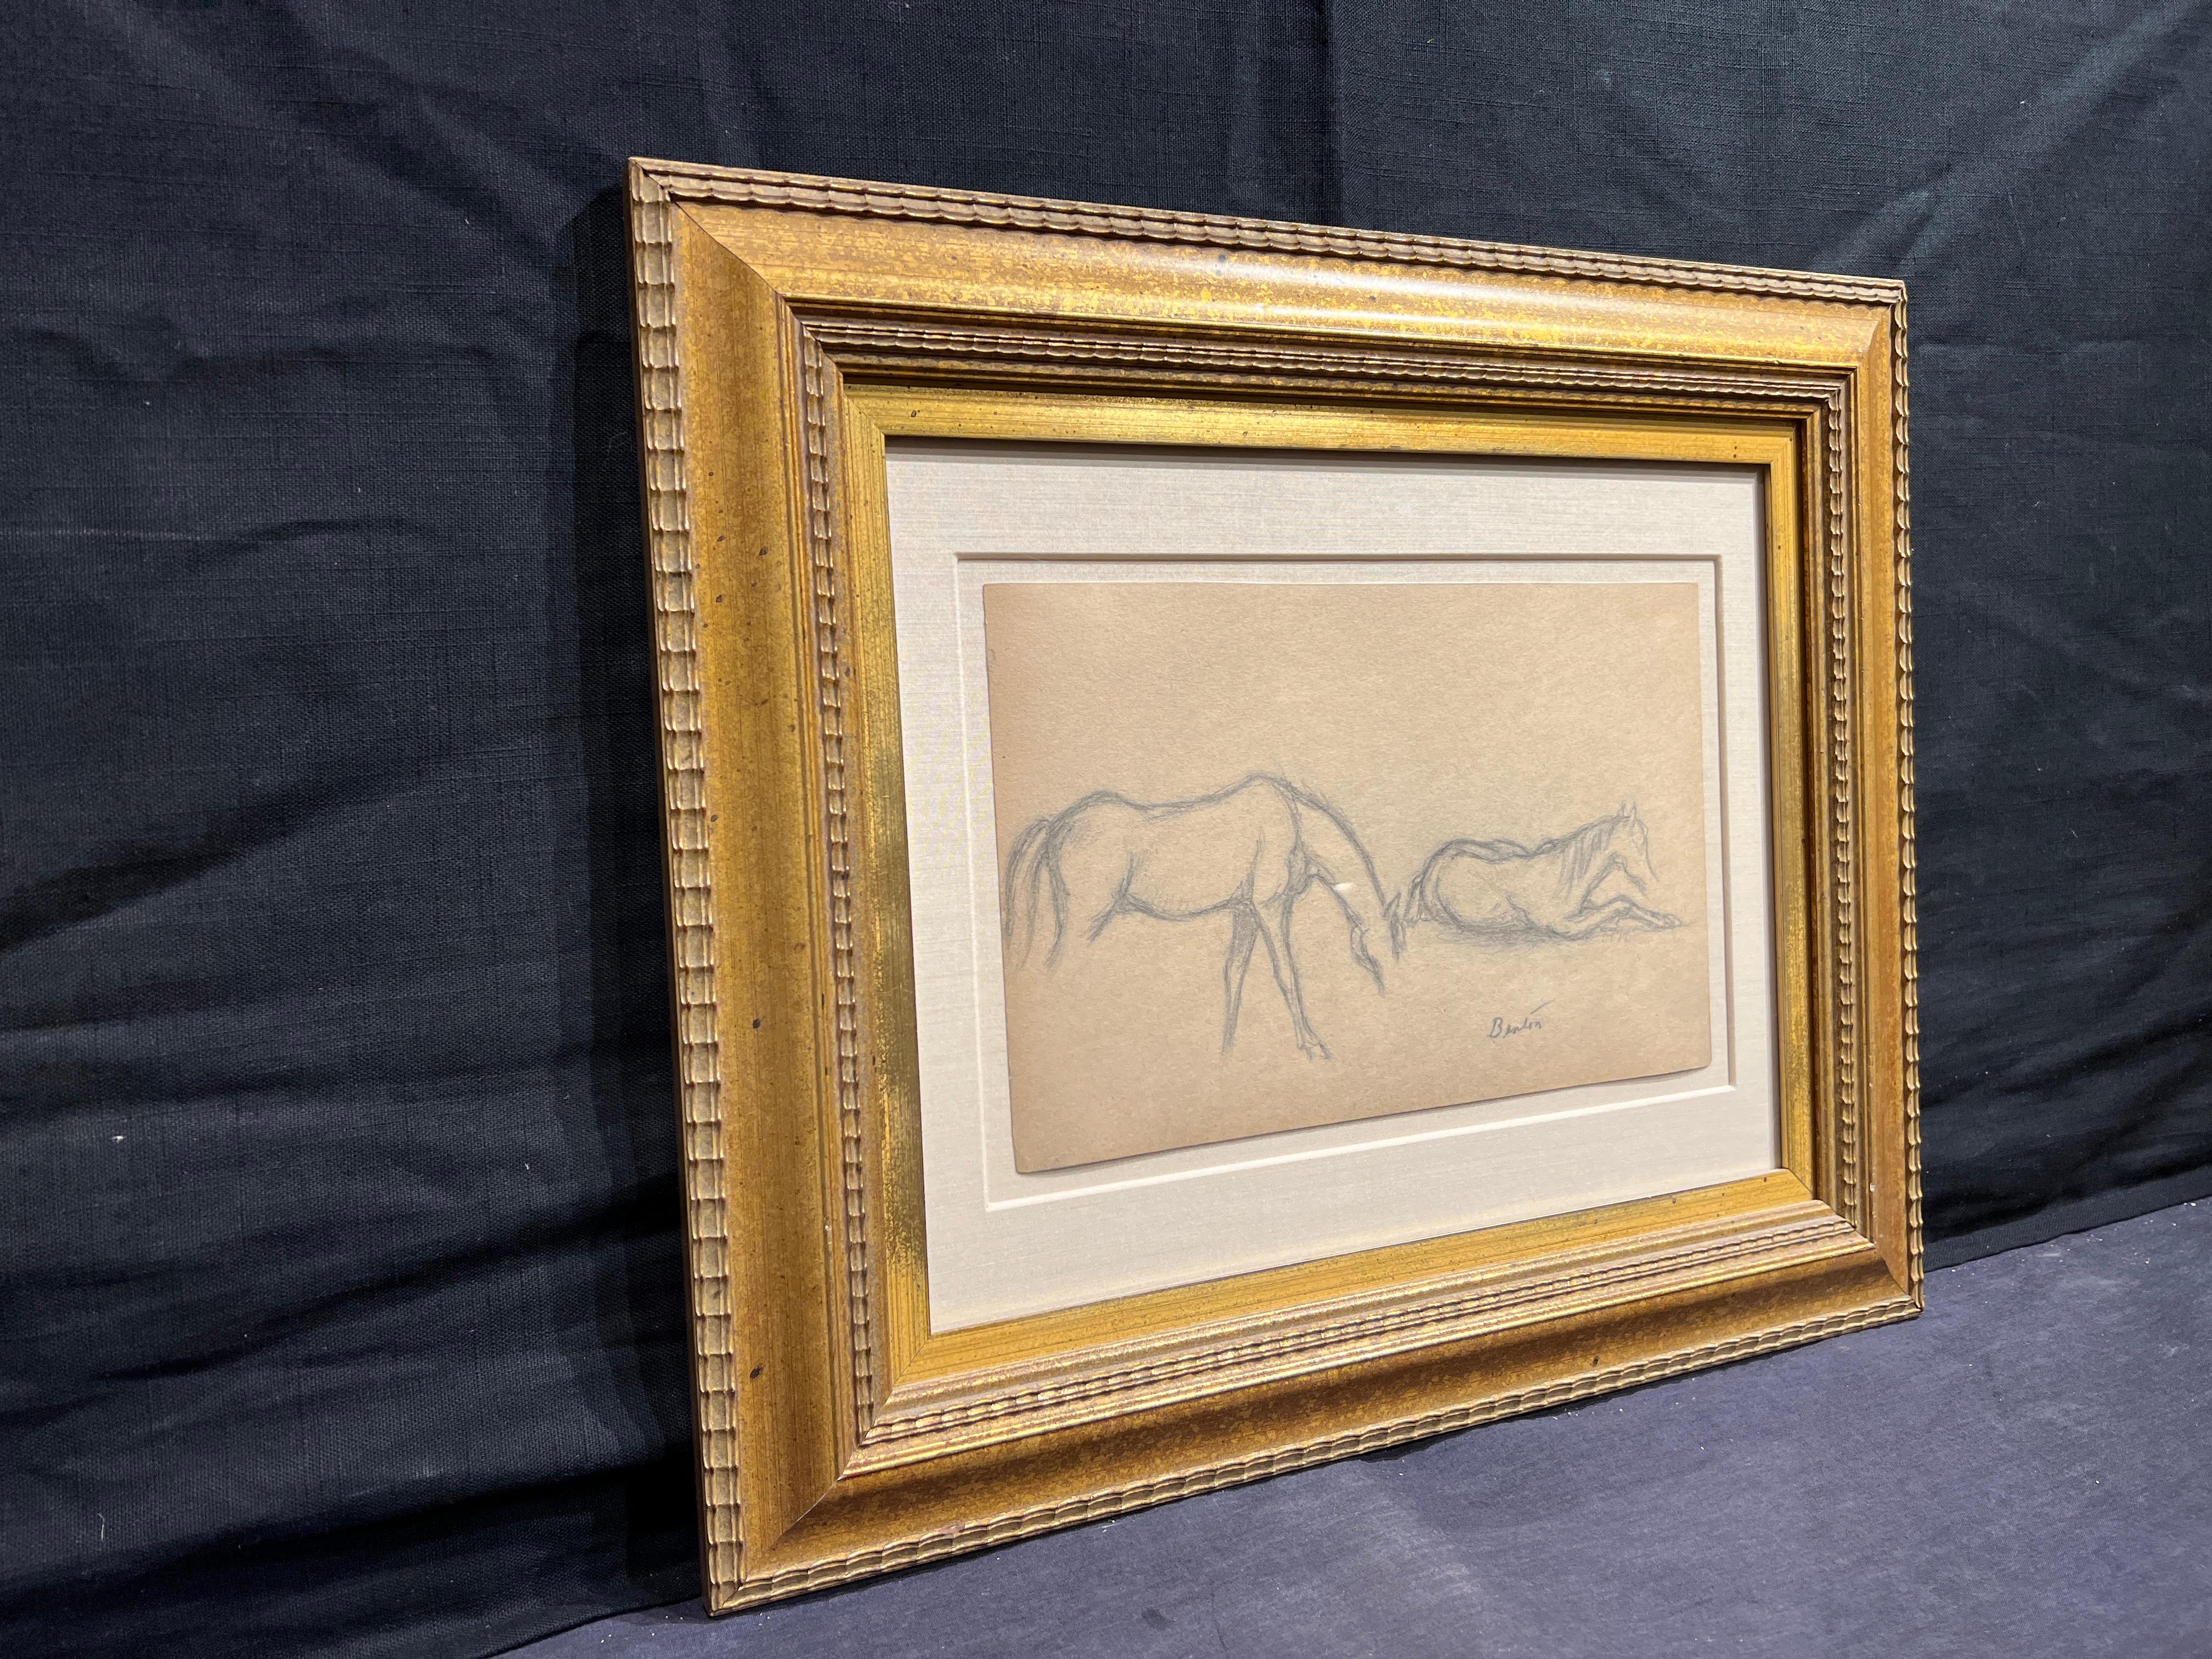 Two Horses - Beige Animal Art by Thomas Hart Benton